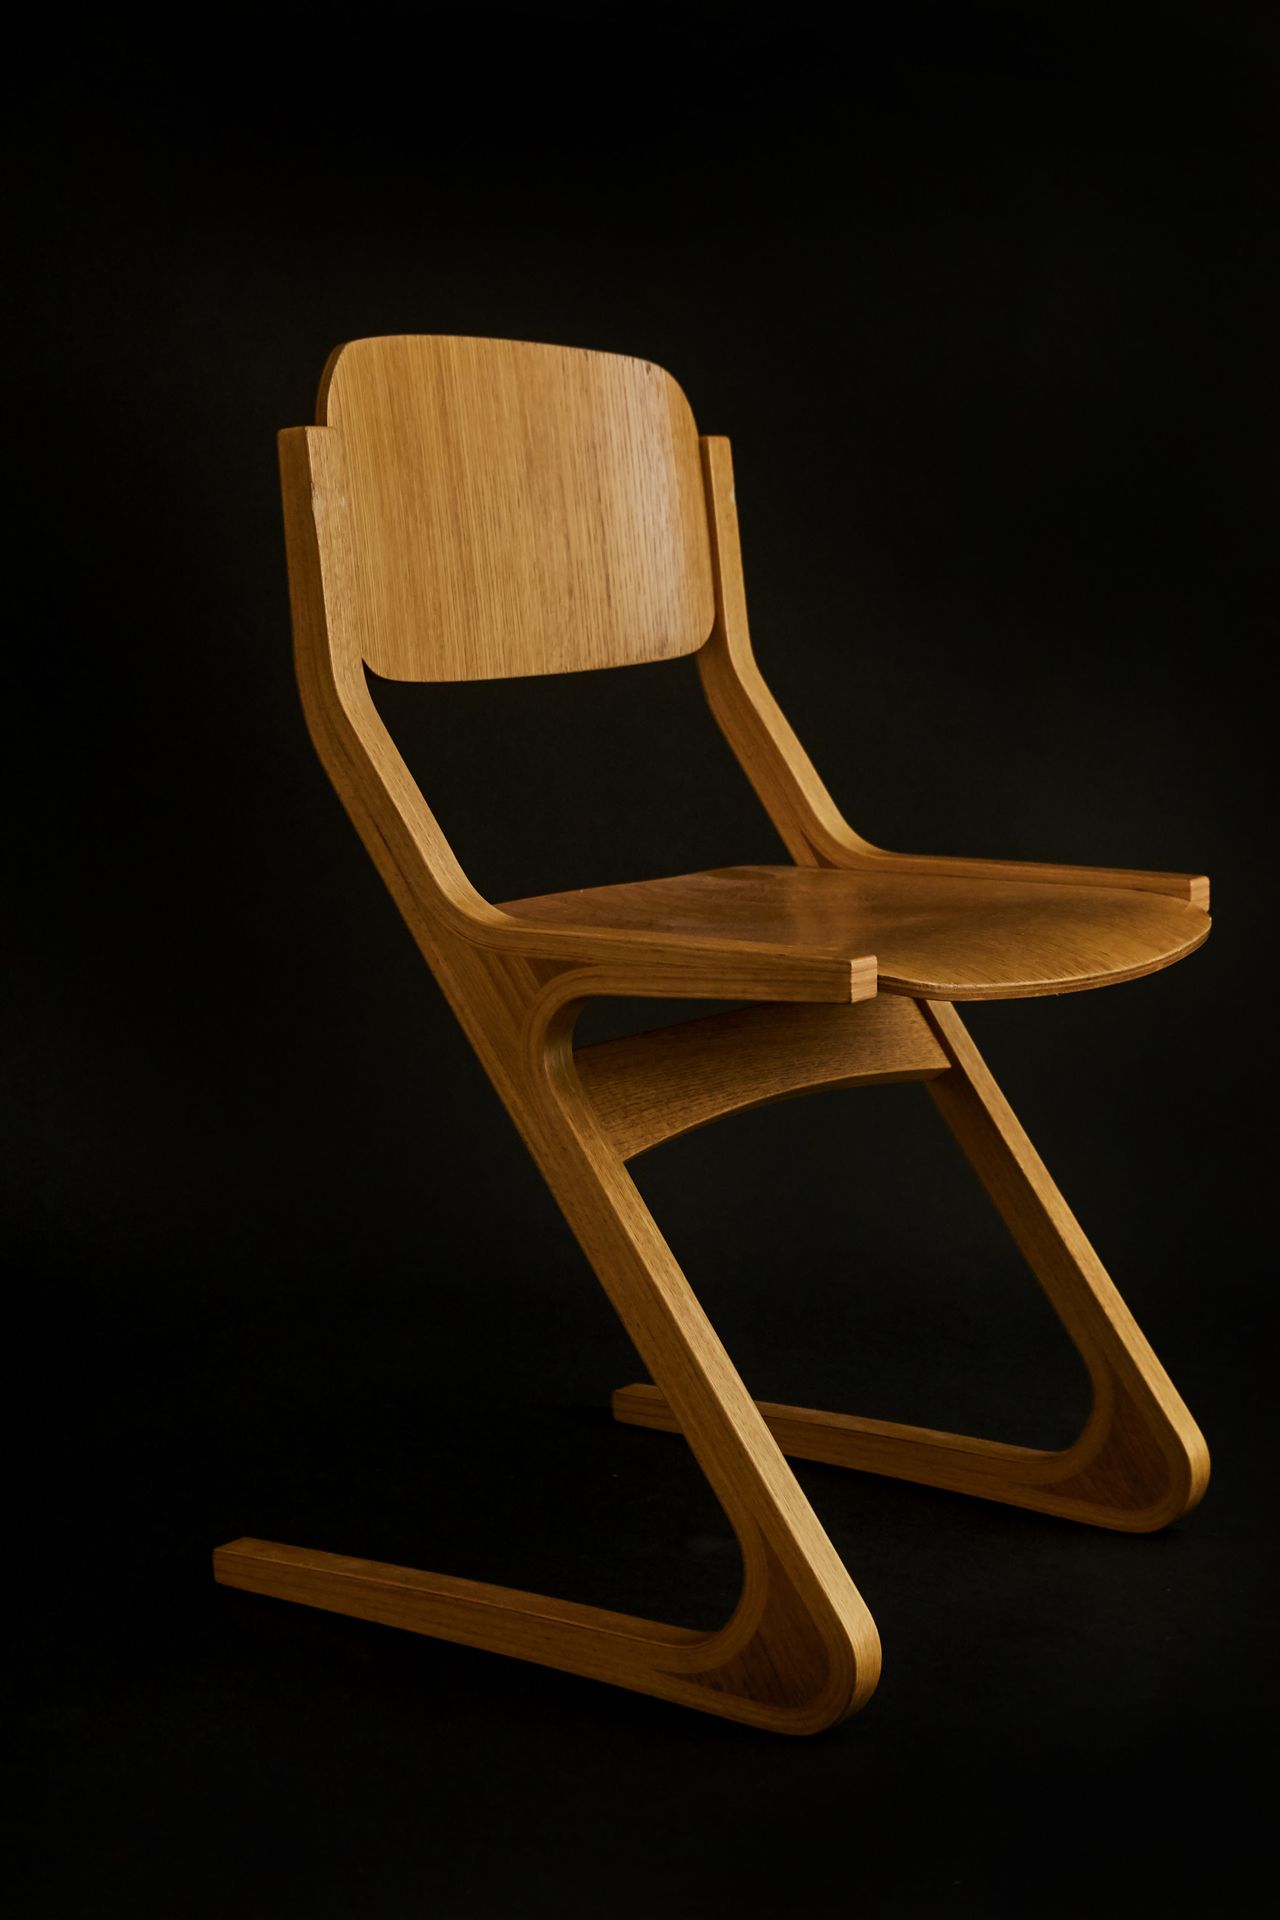 ISAMU KENMOCHI Z chair---Chaise
Wood 
1960
H 77 W 48 D 50 cm